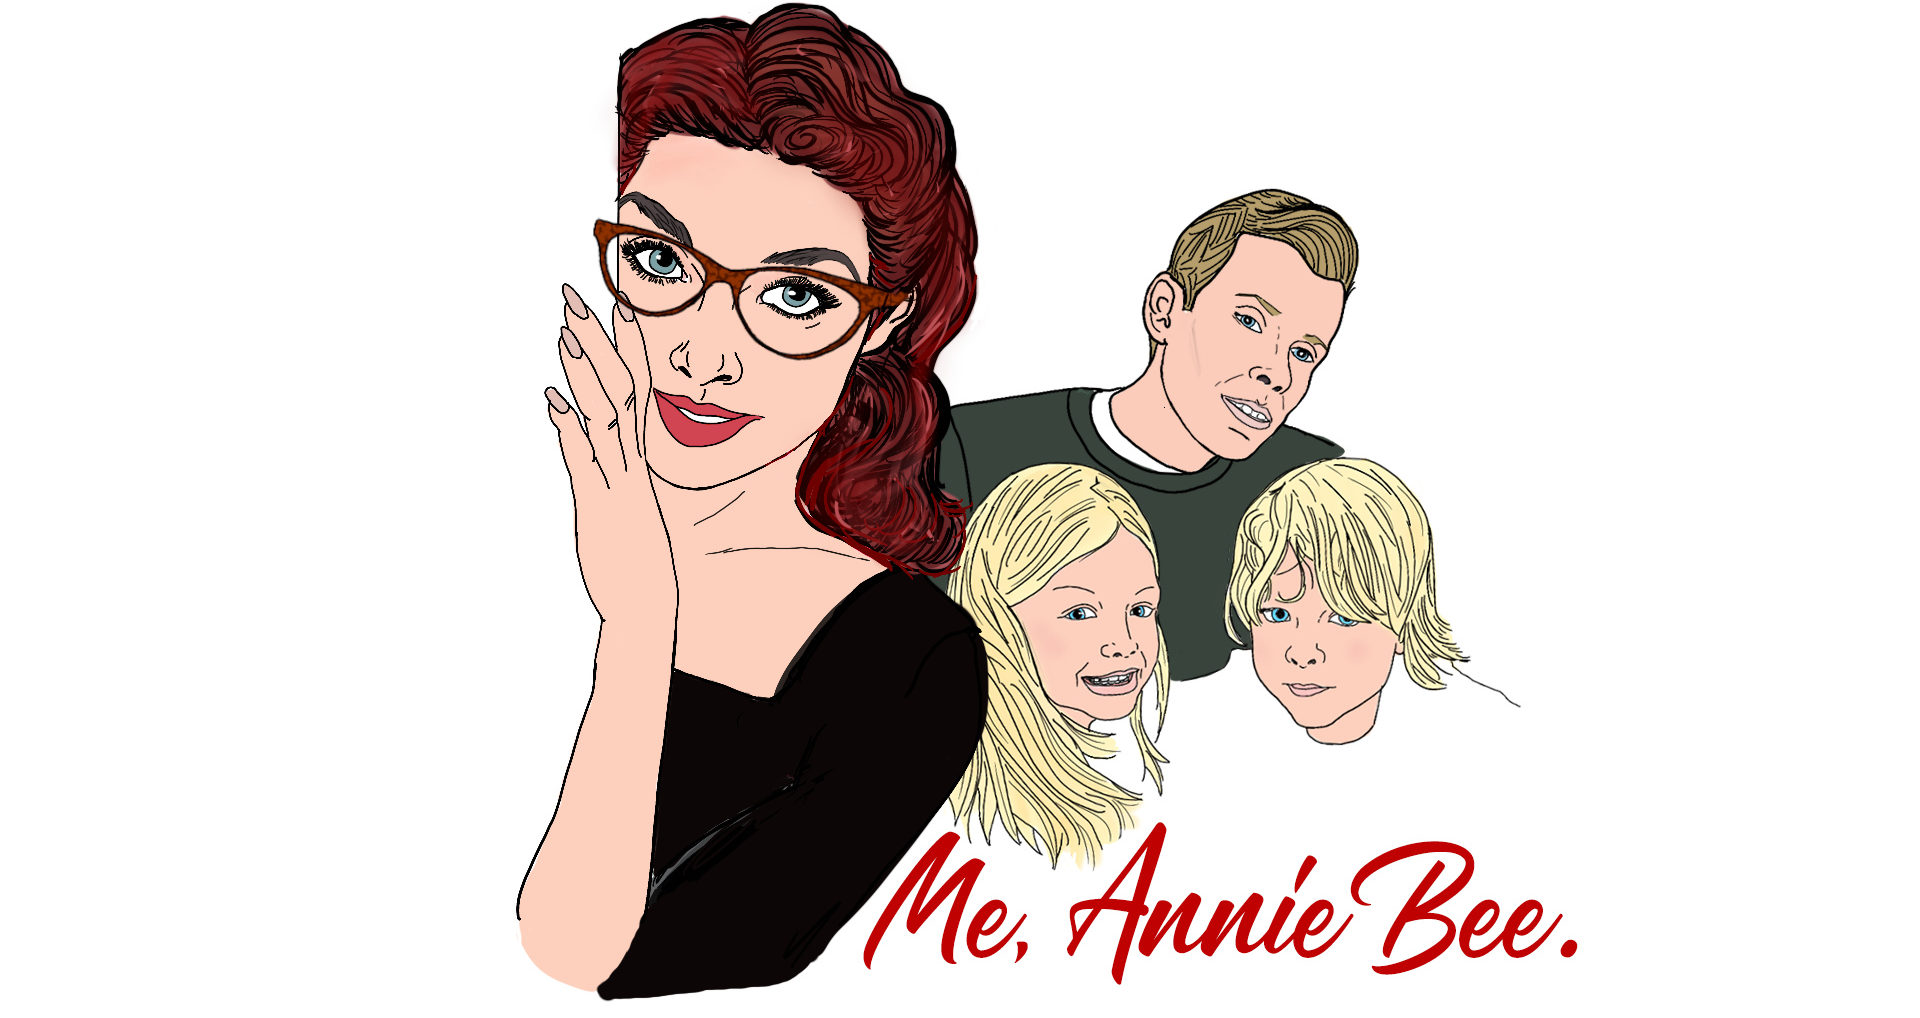 Me, Annie Bee.